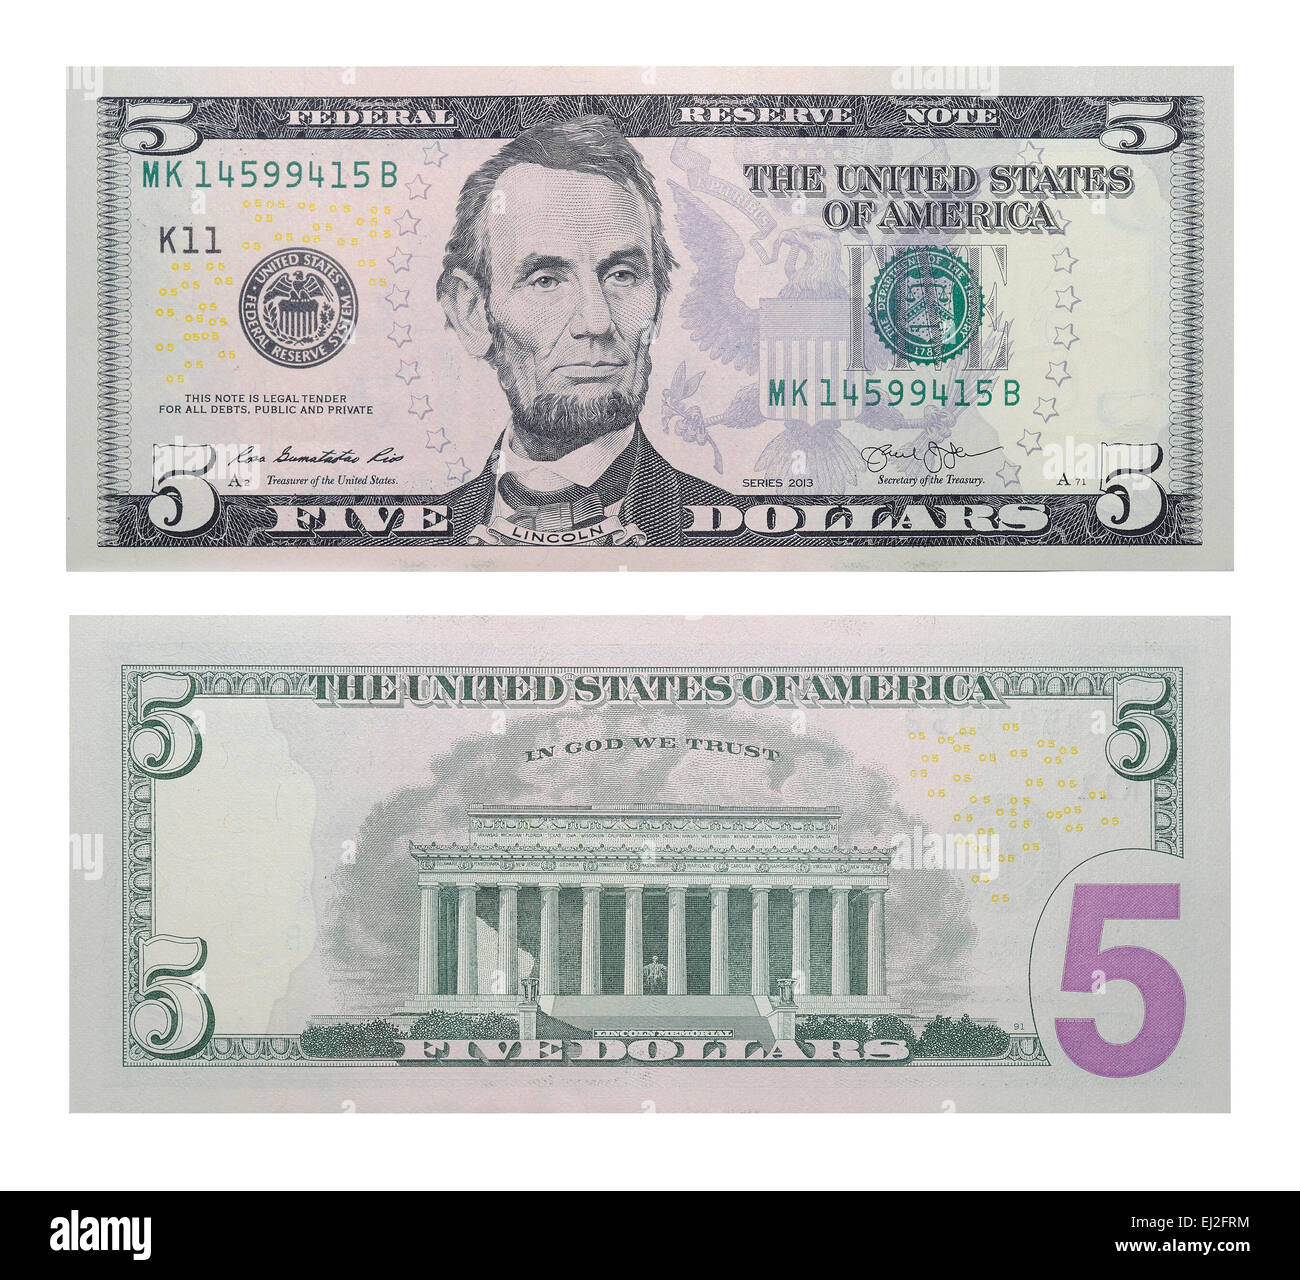 New 5 US dollars banknote Stock Photo - Alamy